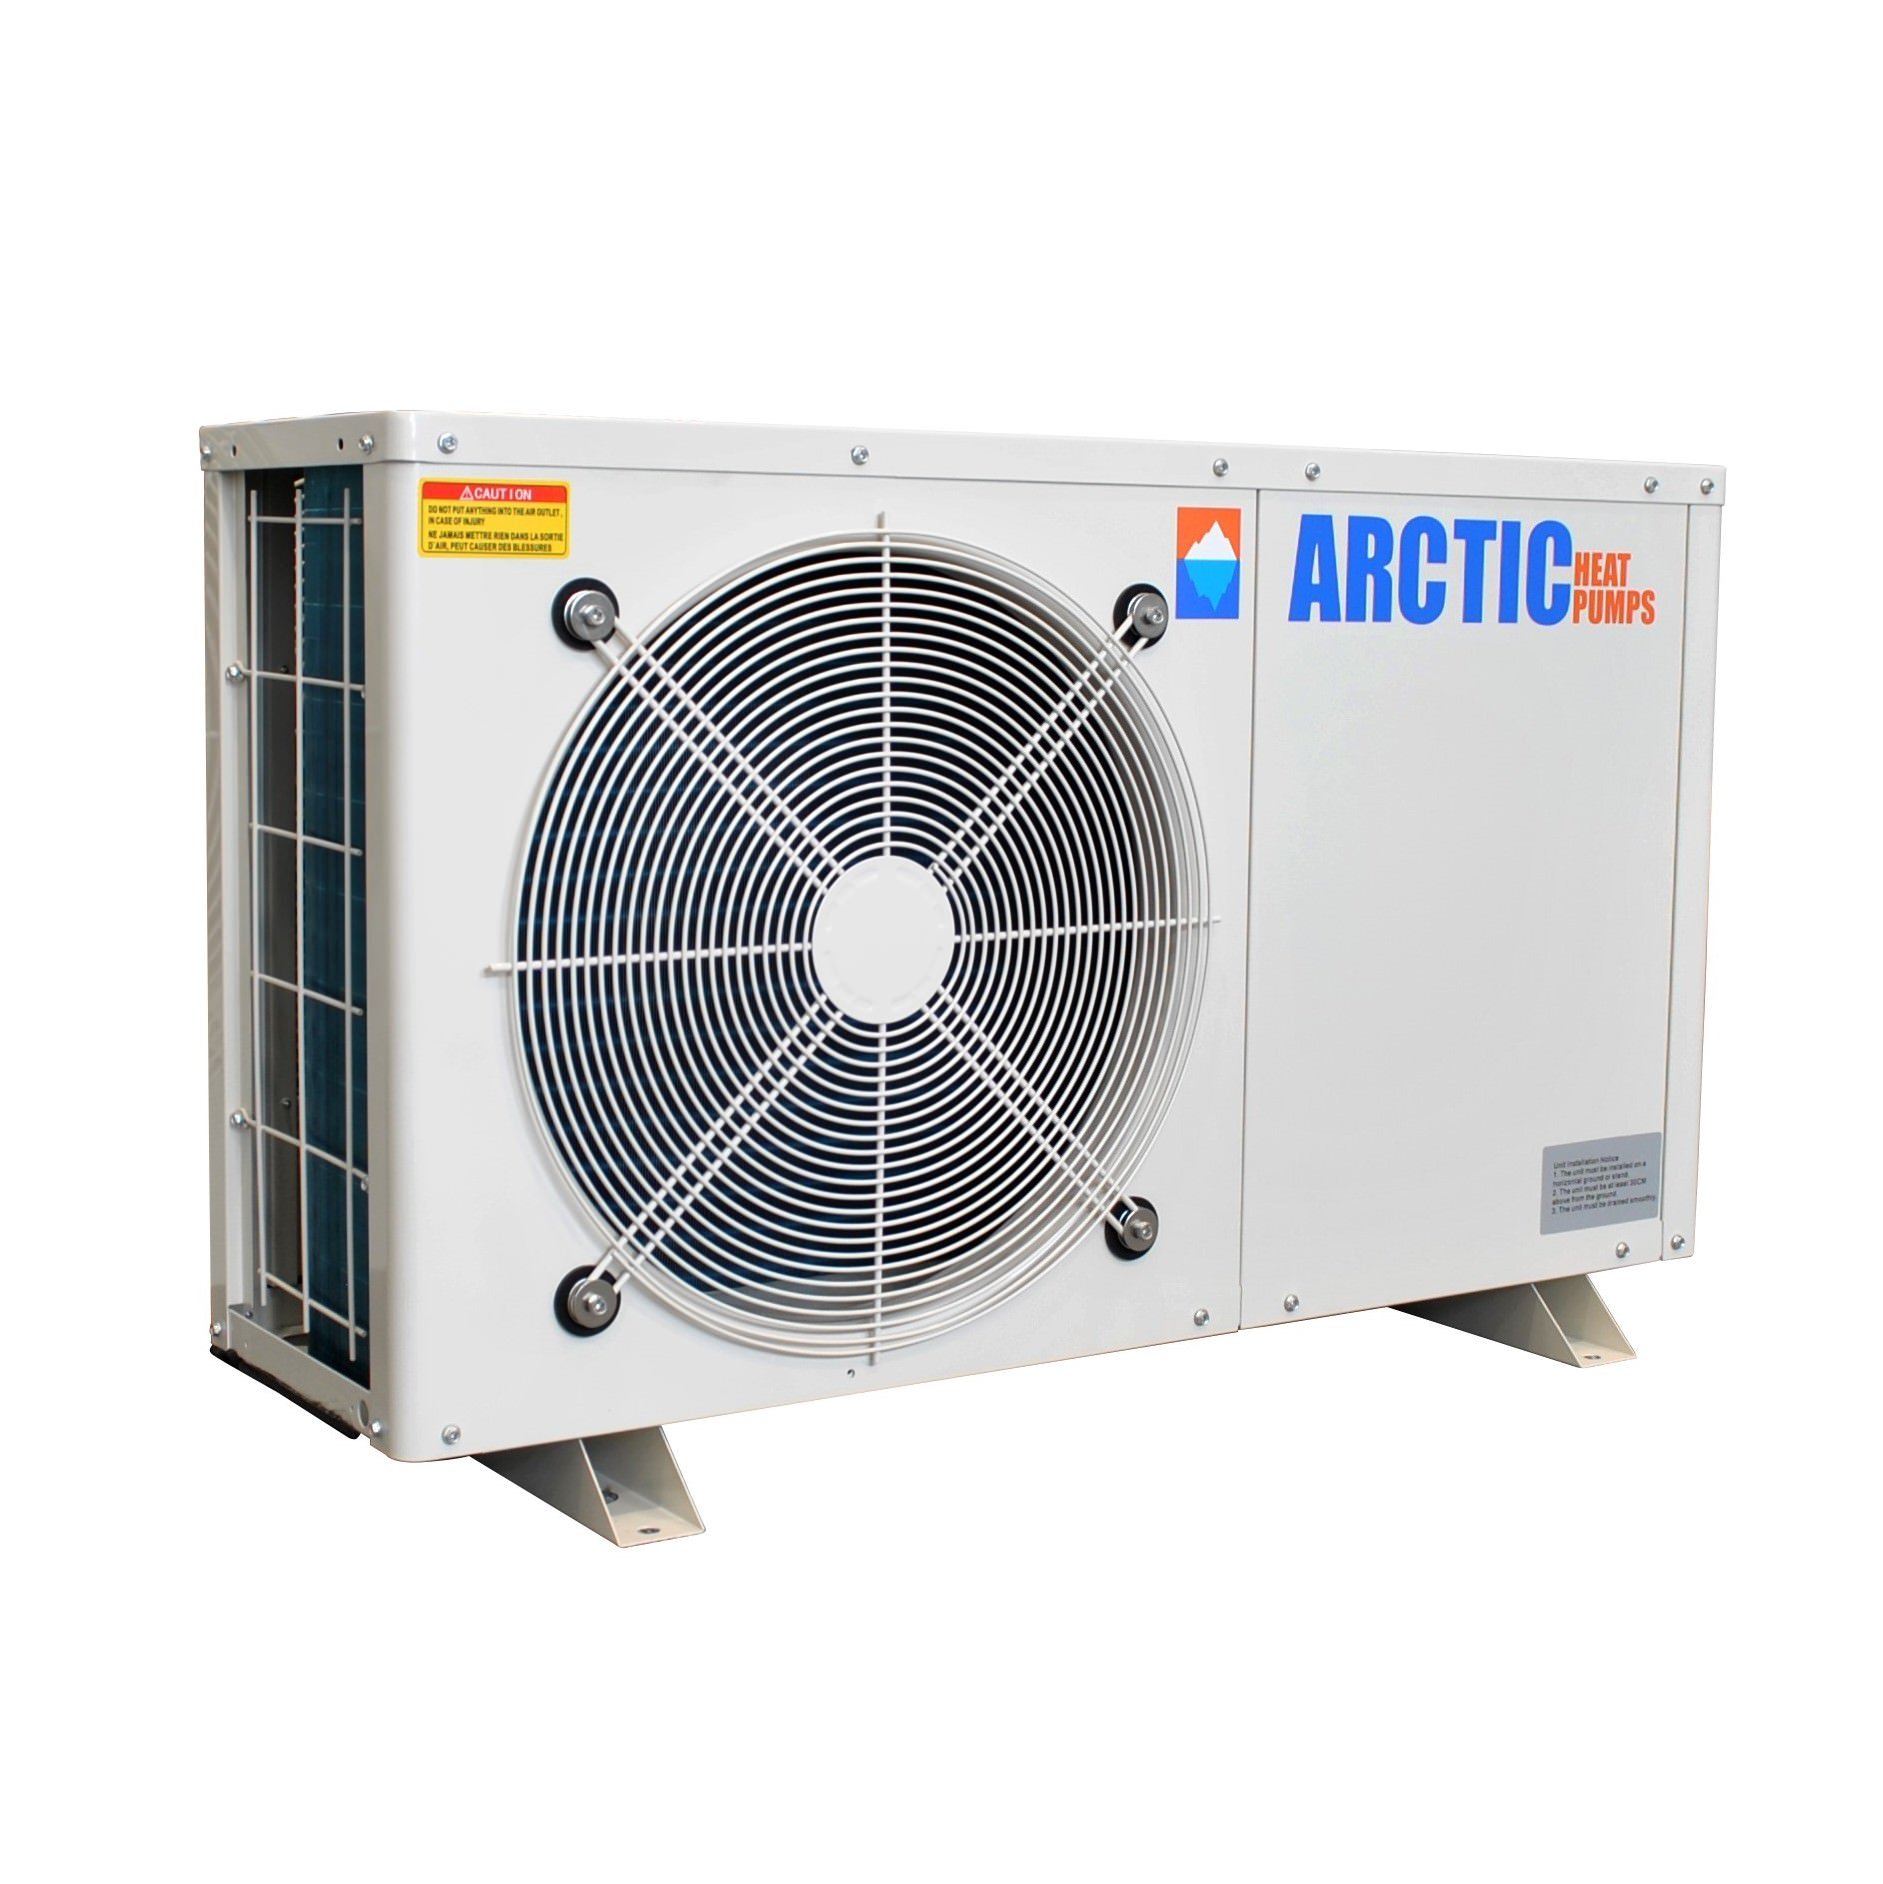 Arctic Heat Pump 015ZA/B